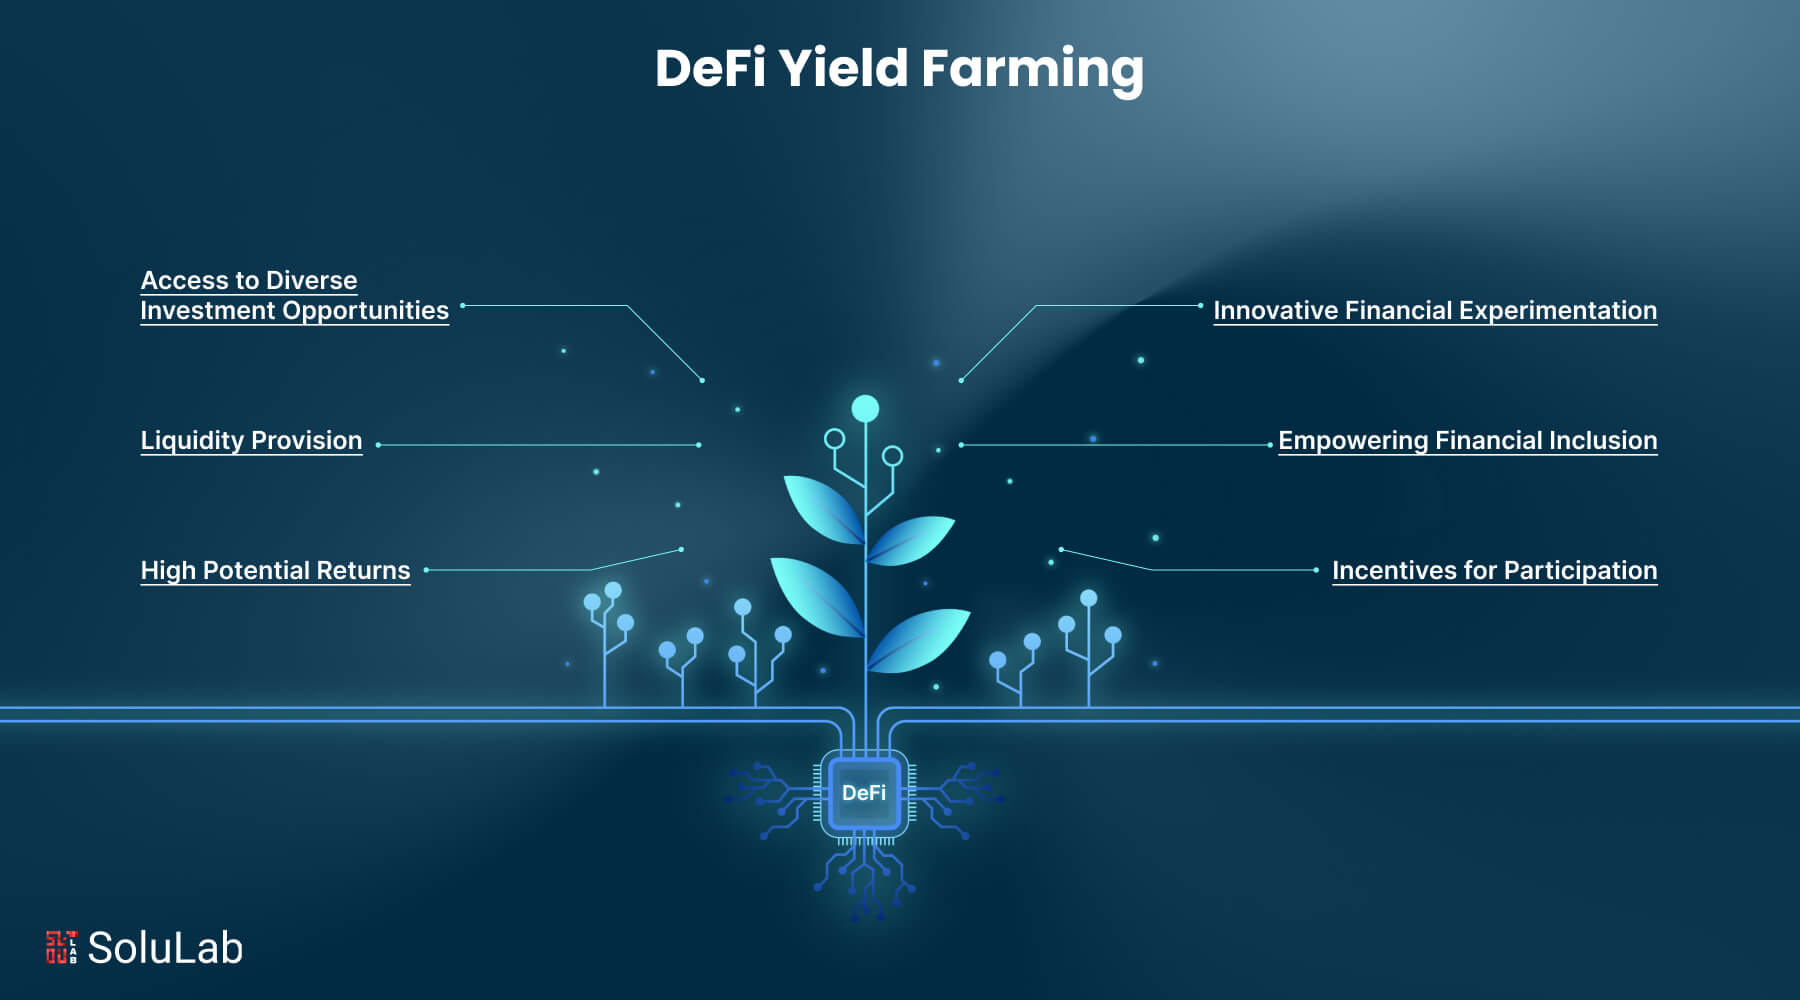 Guide to DeFi Yield Farming